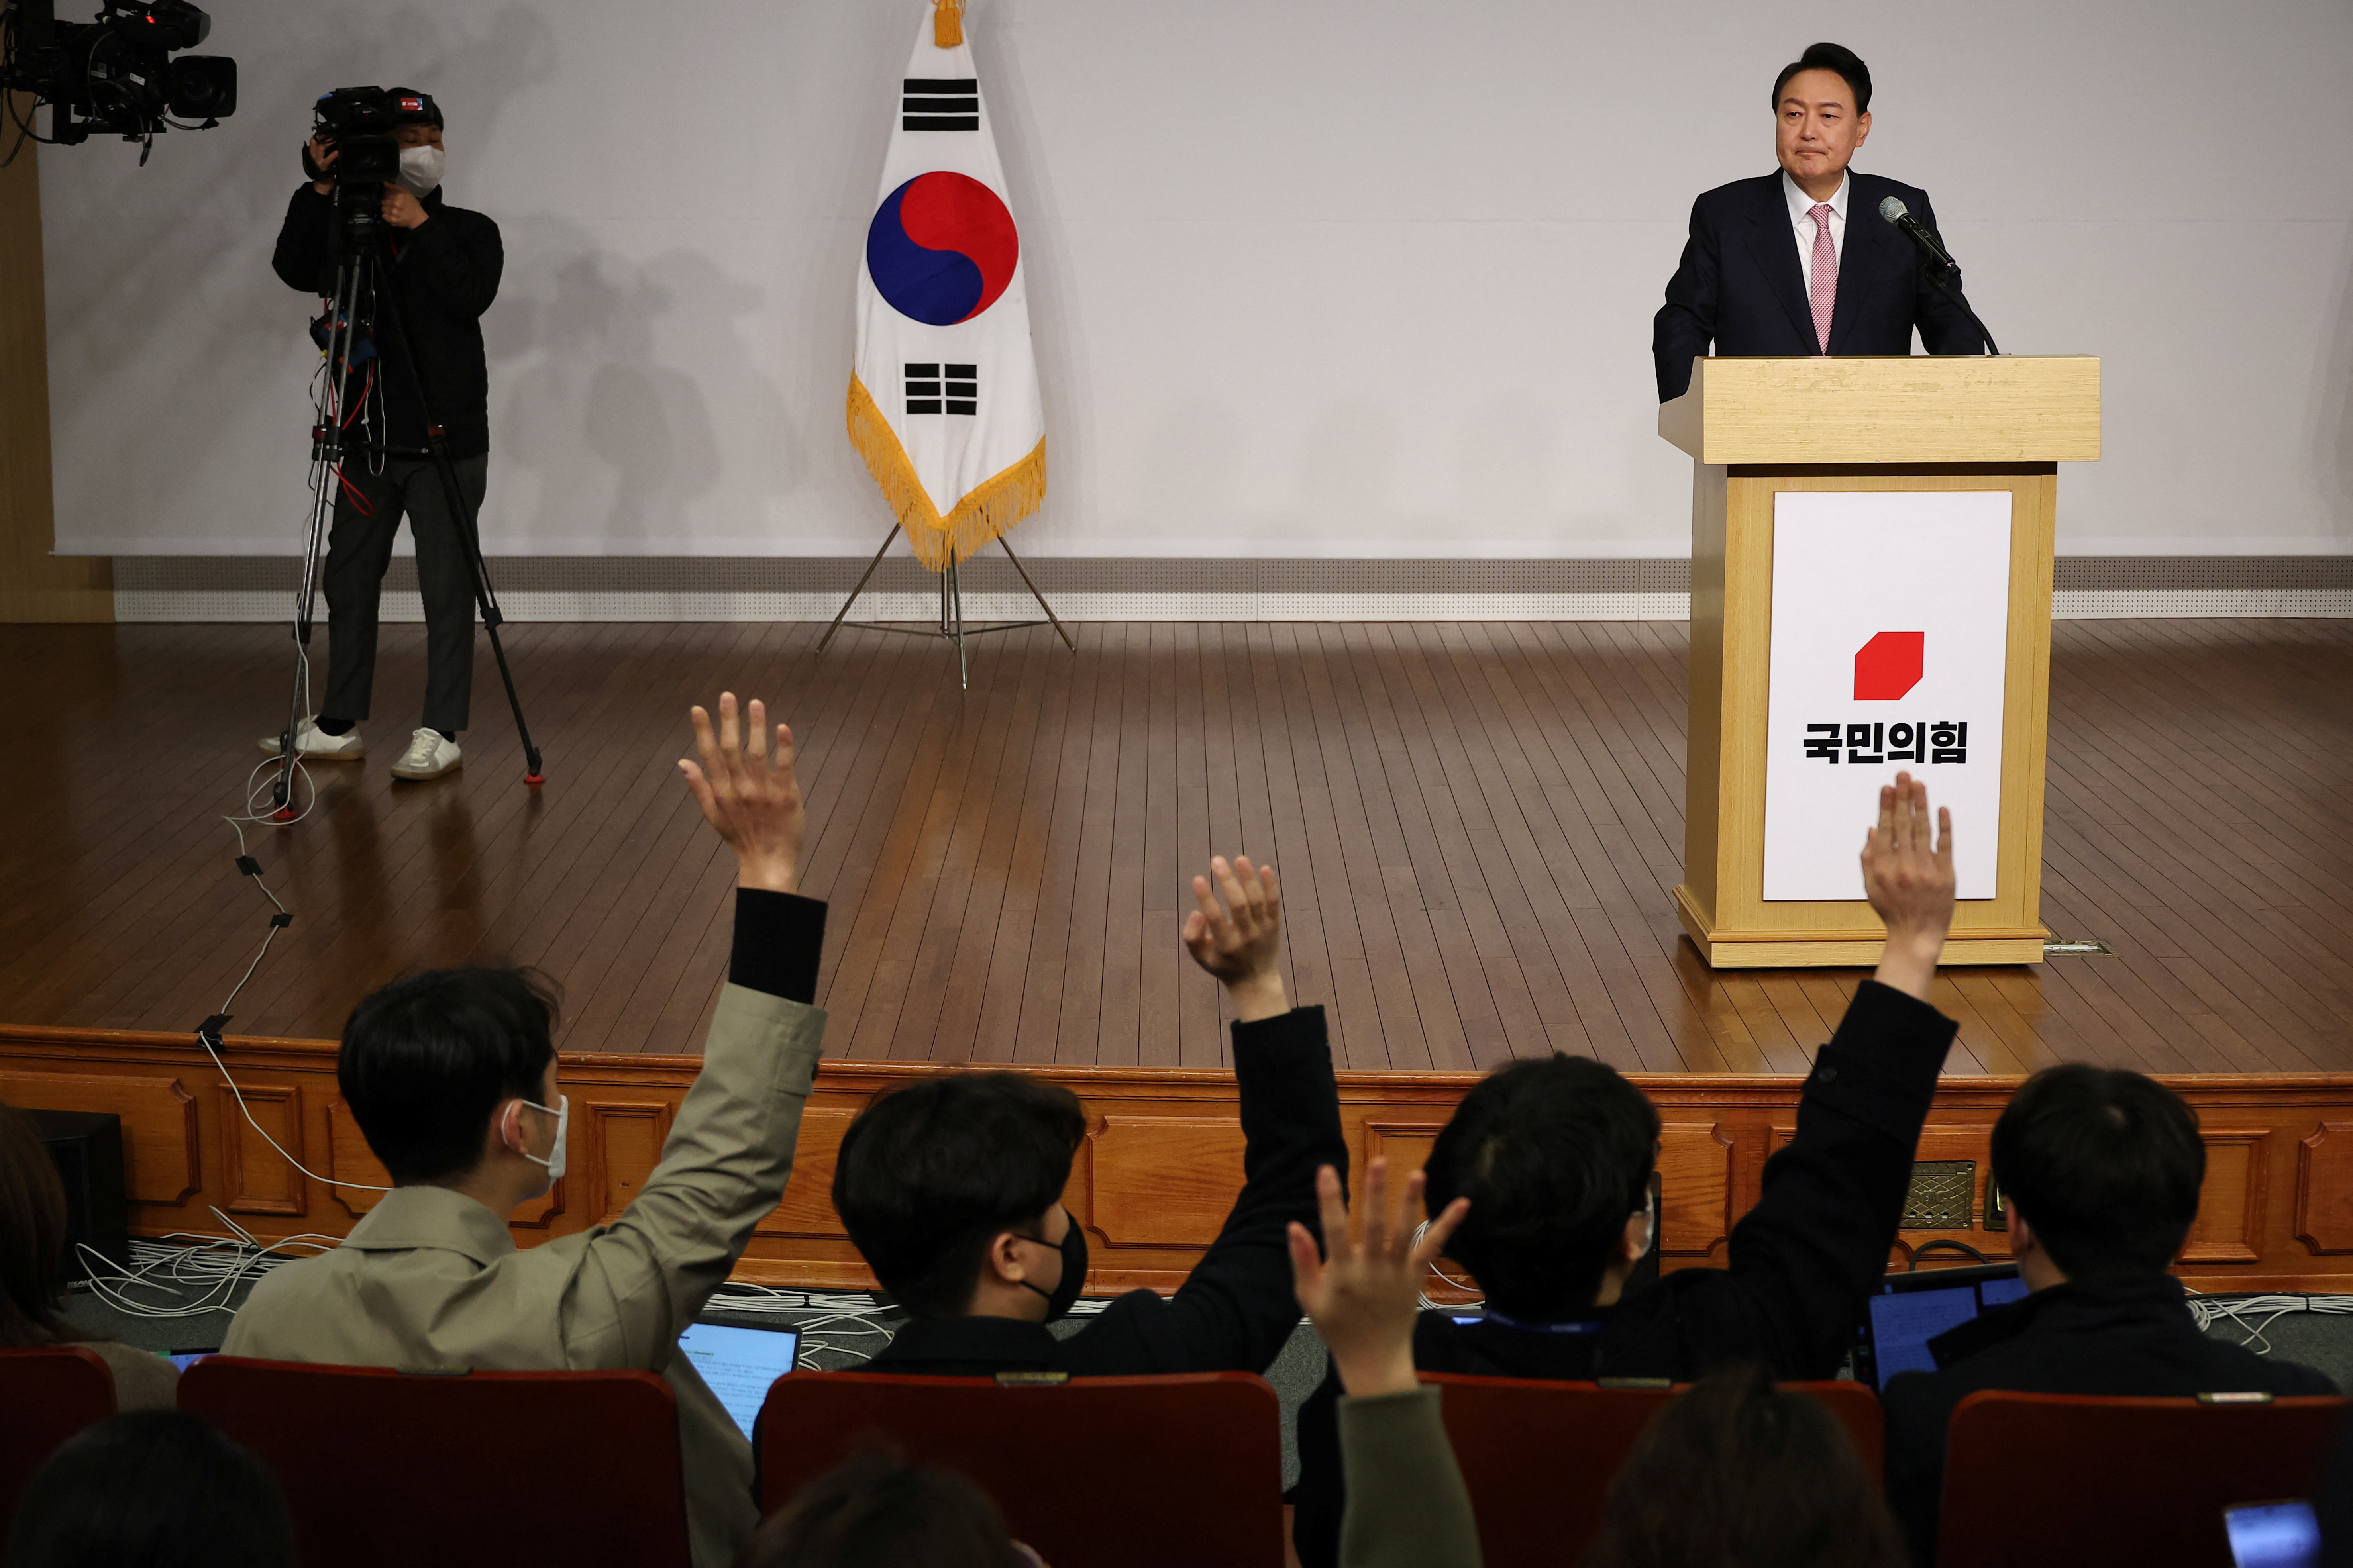 News conference of South Korea's president-elect Yoon Suk-yeol